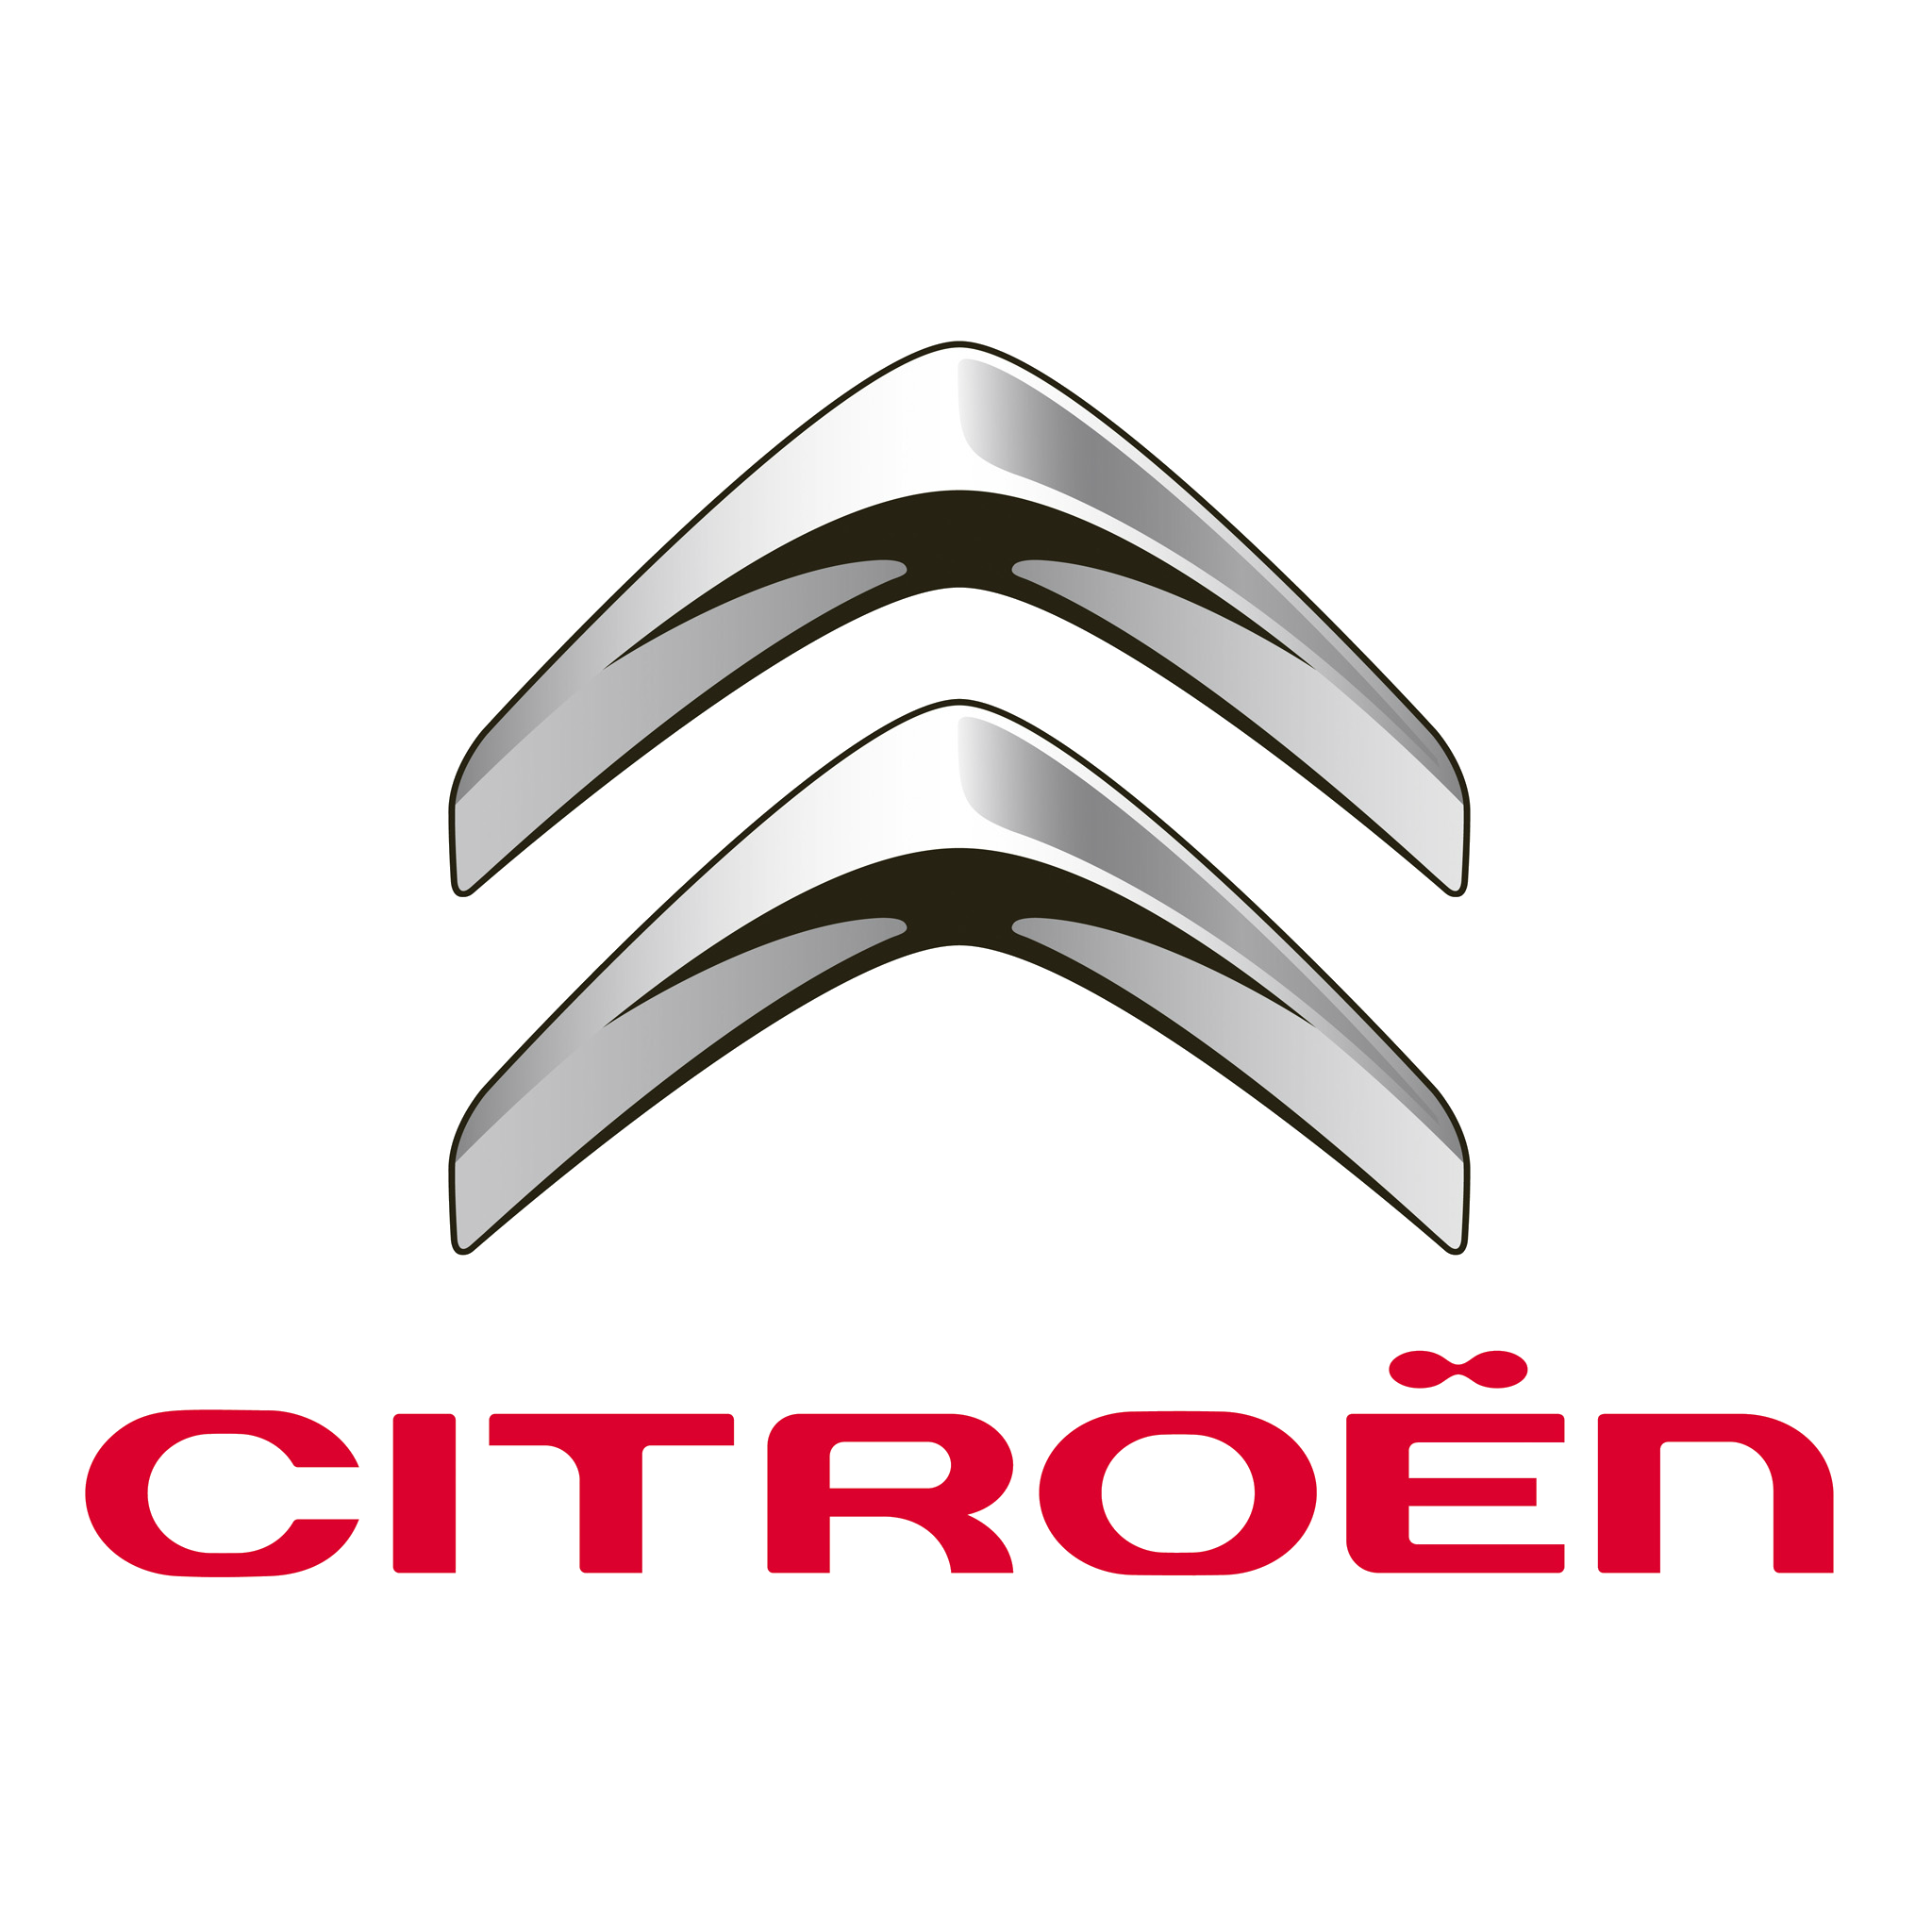 Citroen Logo Wallpapers